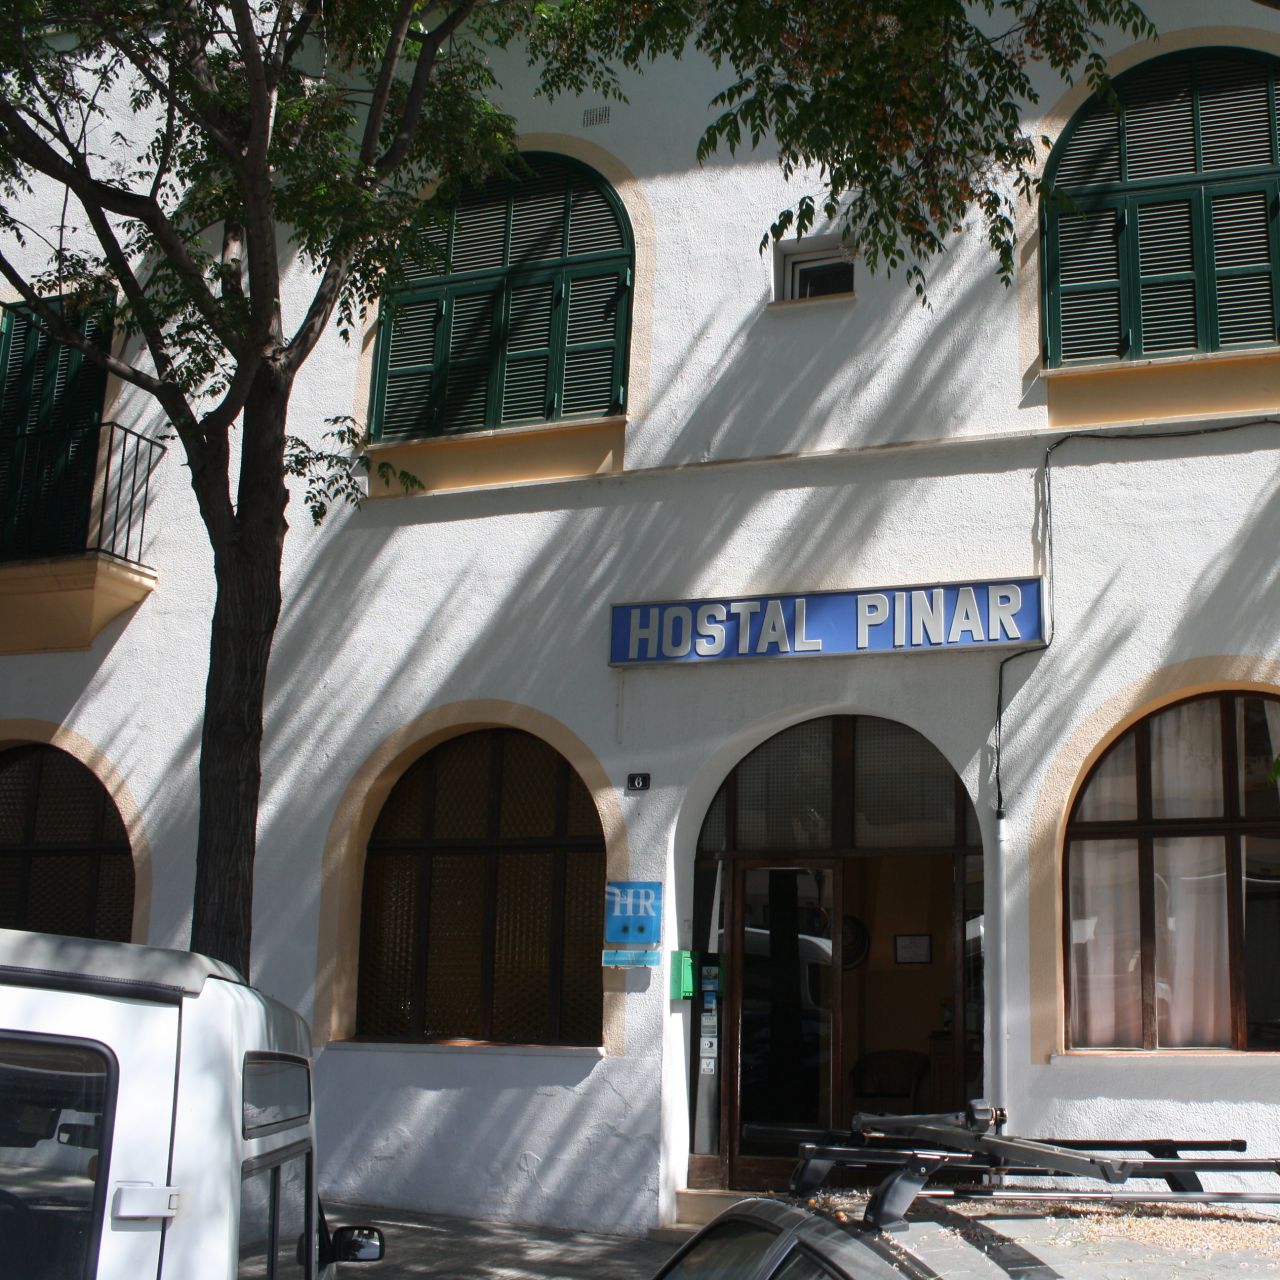 Hotel Hostal Pinar - Palma de Majorque - HOTEL INFO